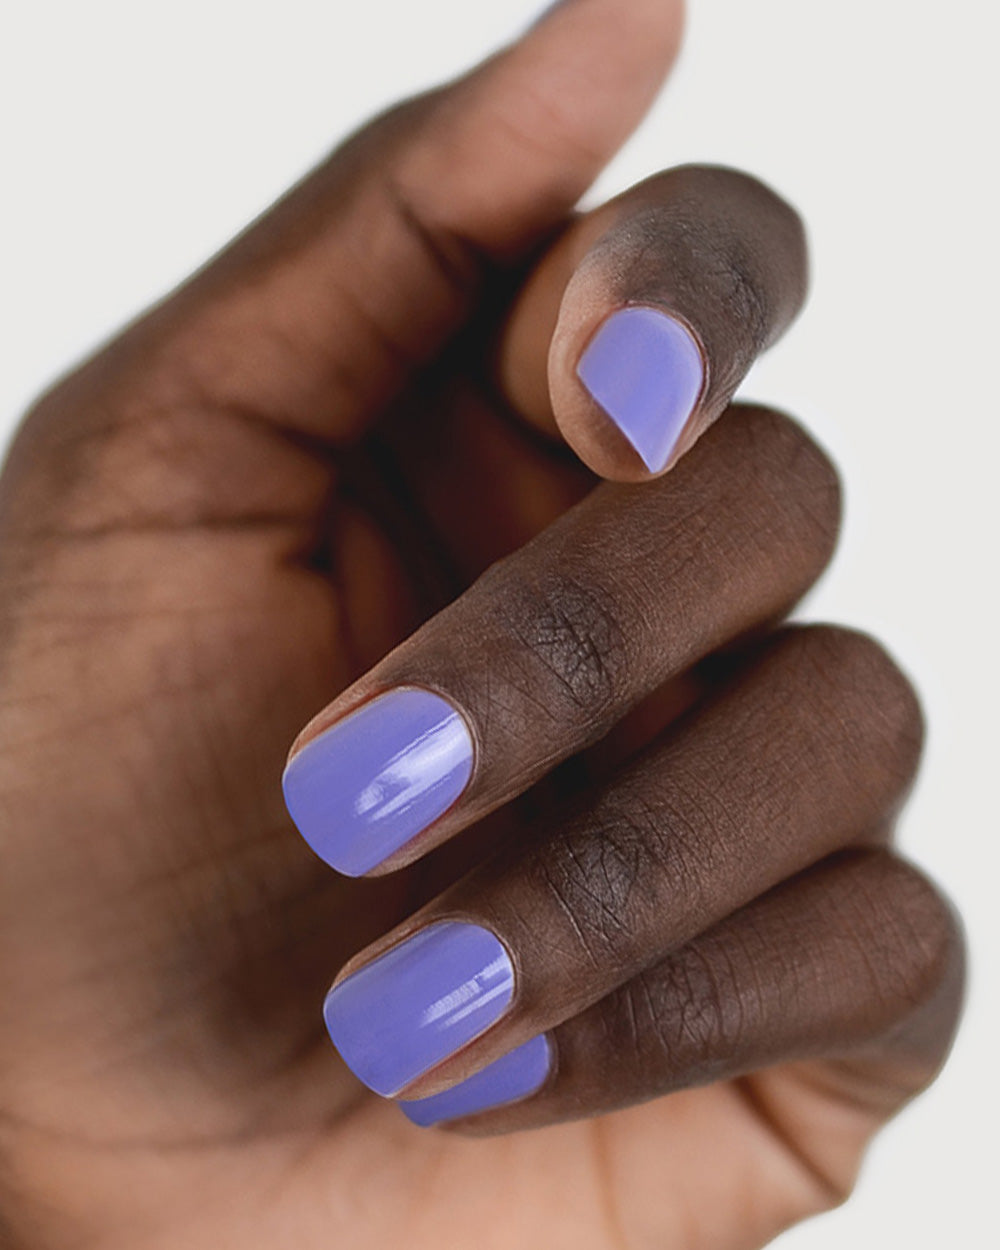 Gentle Midtone Blue Lilac Crème nail polish by Sienna Byron Bay on dark skin tone hand.